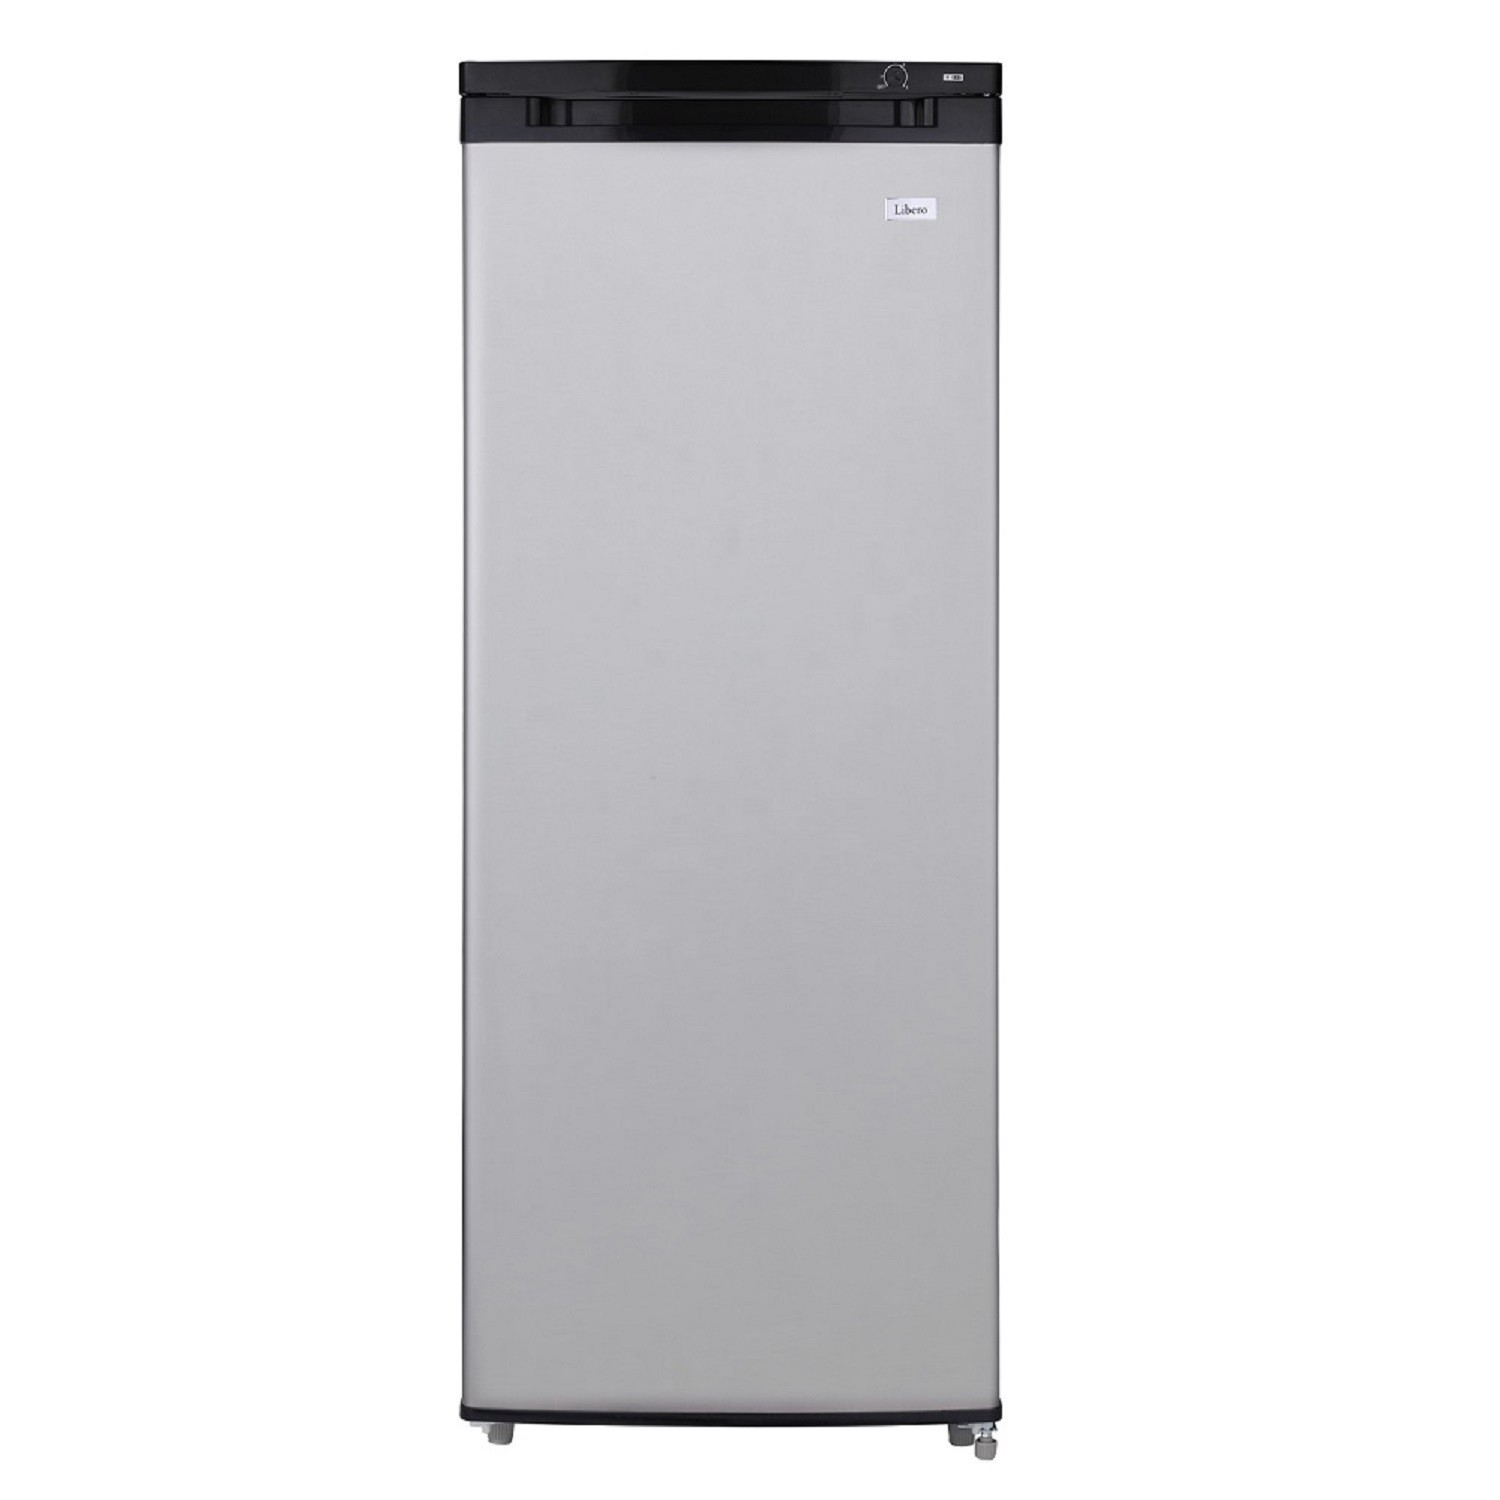 Refrigerador Combi Frio Directo LRB-180DFI 157 Lts.